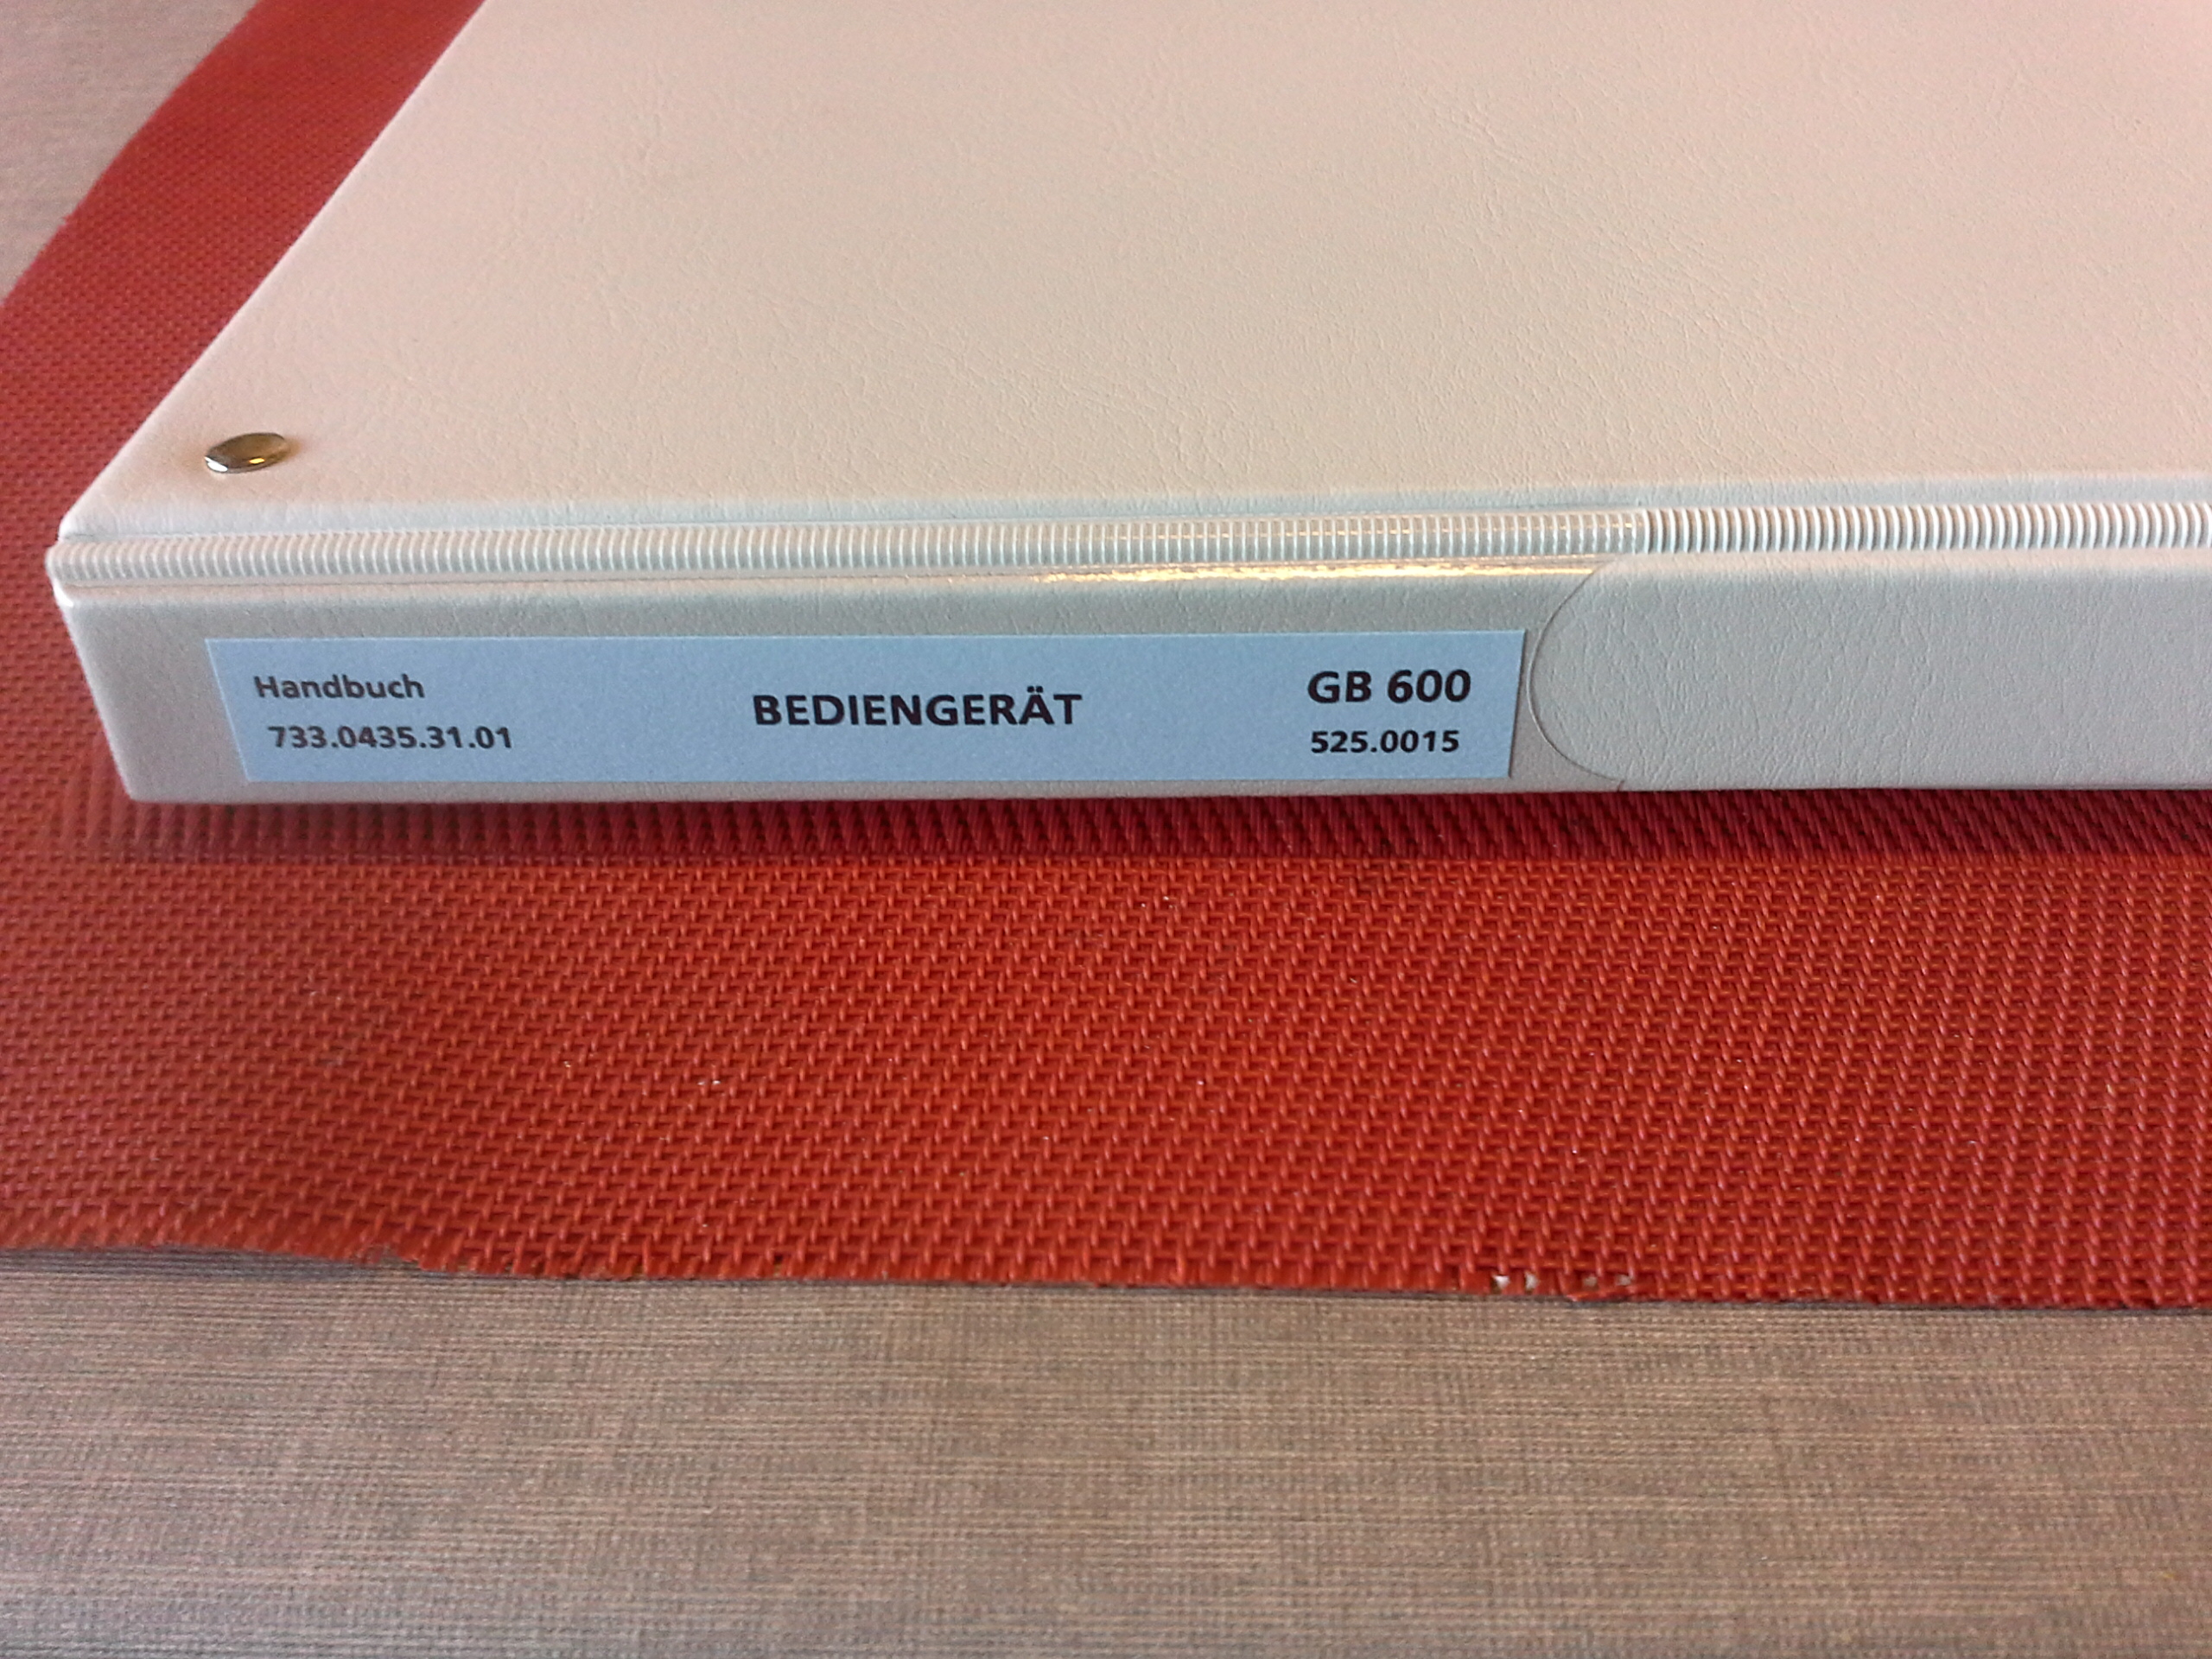 Handbuch, Rohde & Schwarz, Bediengerät GB 600